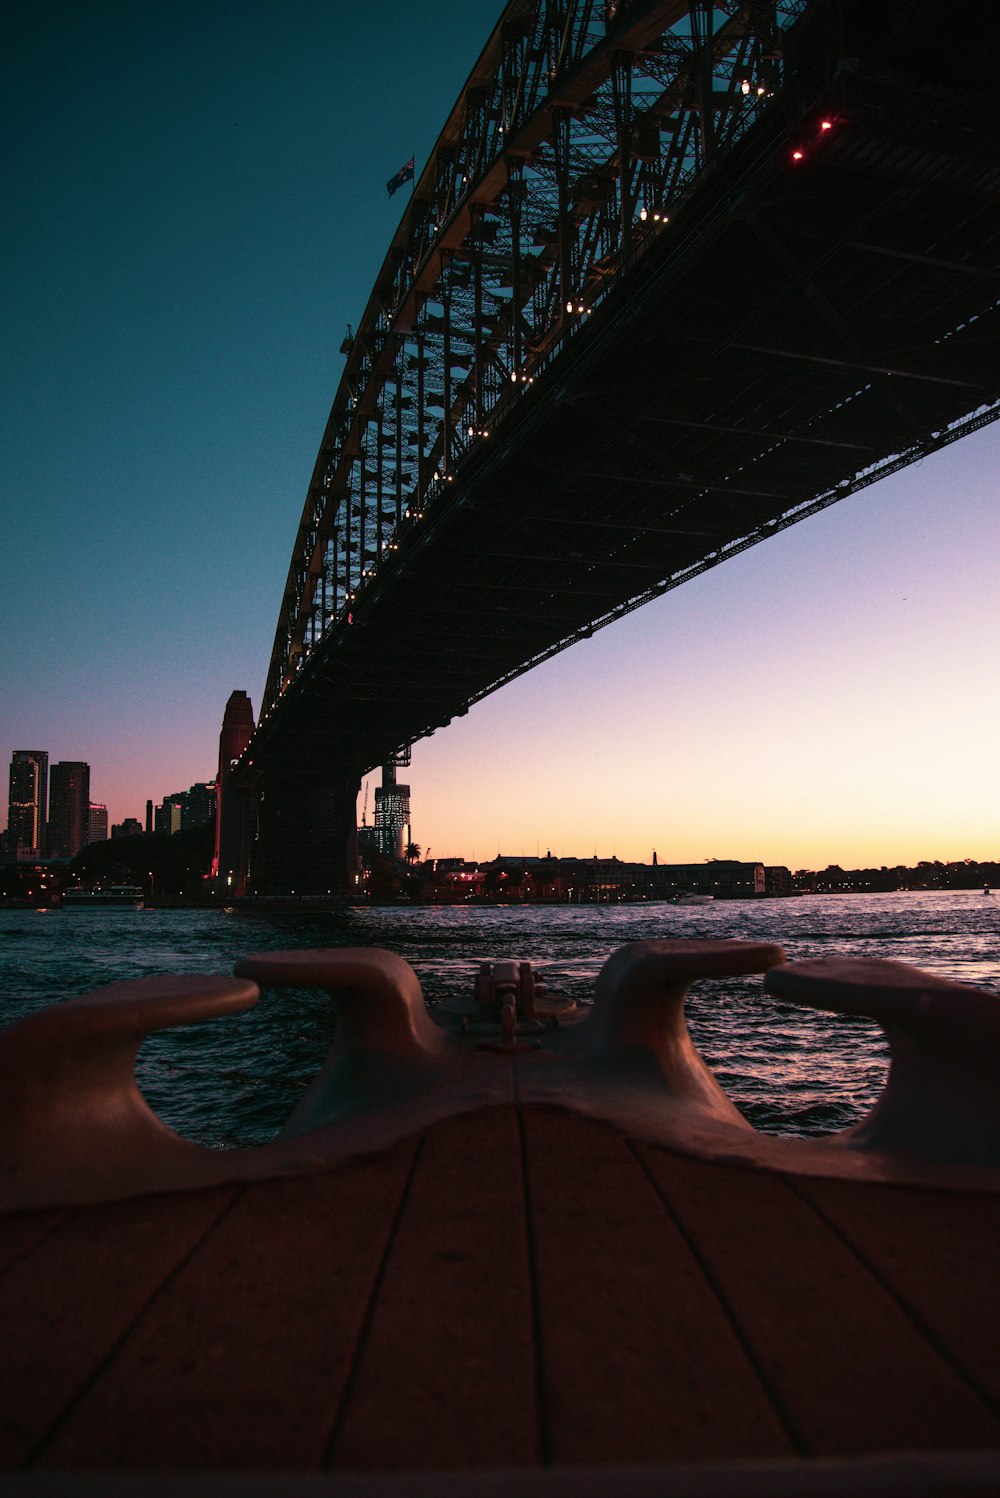 bridge over water during sunset